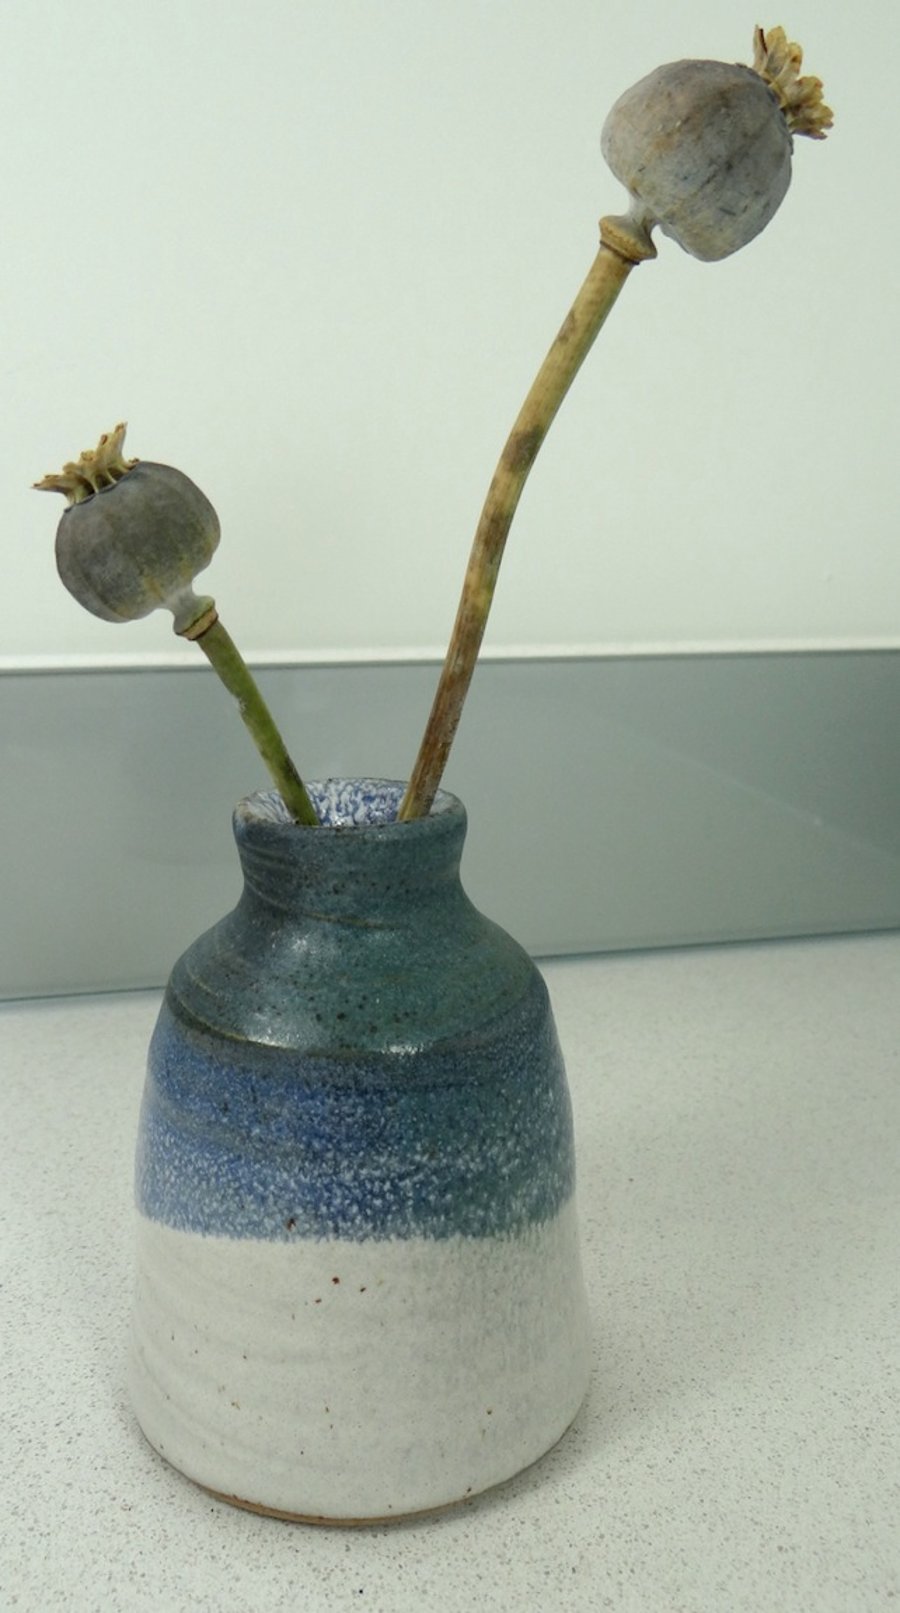 Ceramic bud vase in white, blue and green - handmade pottery